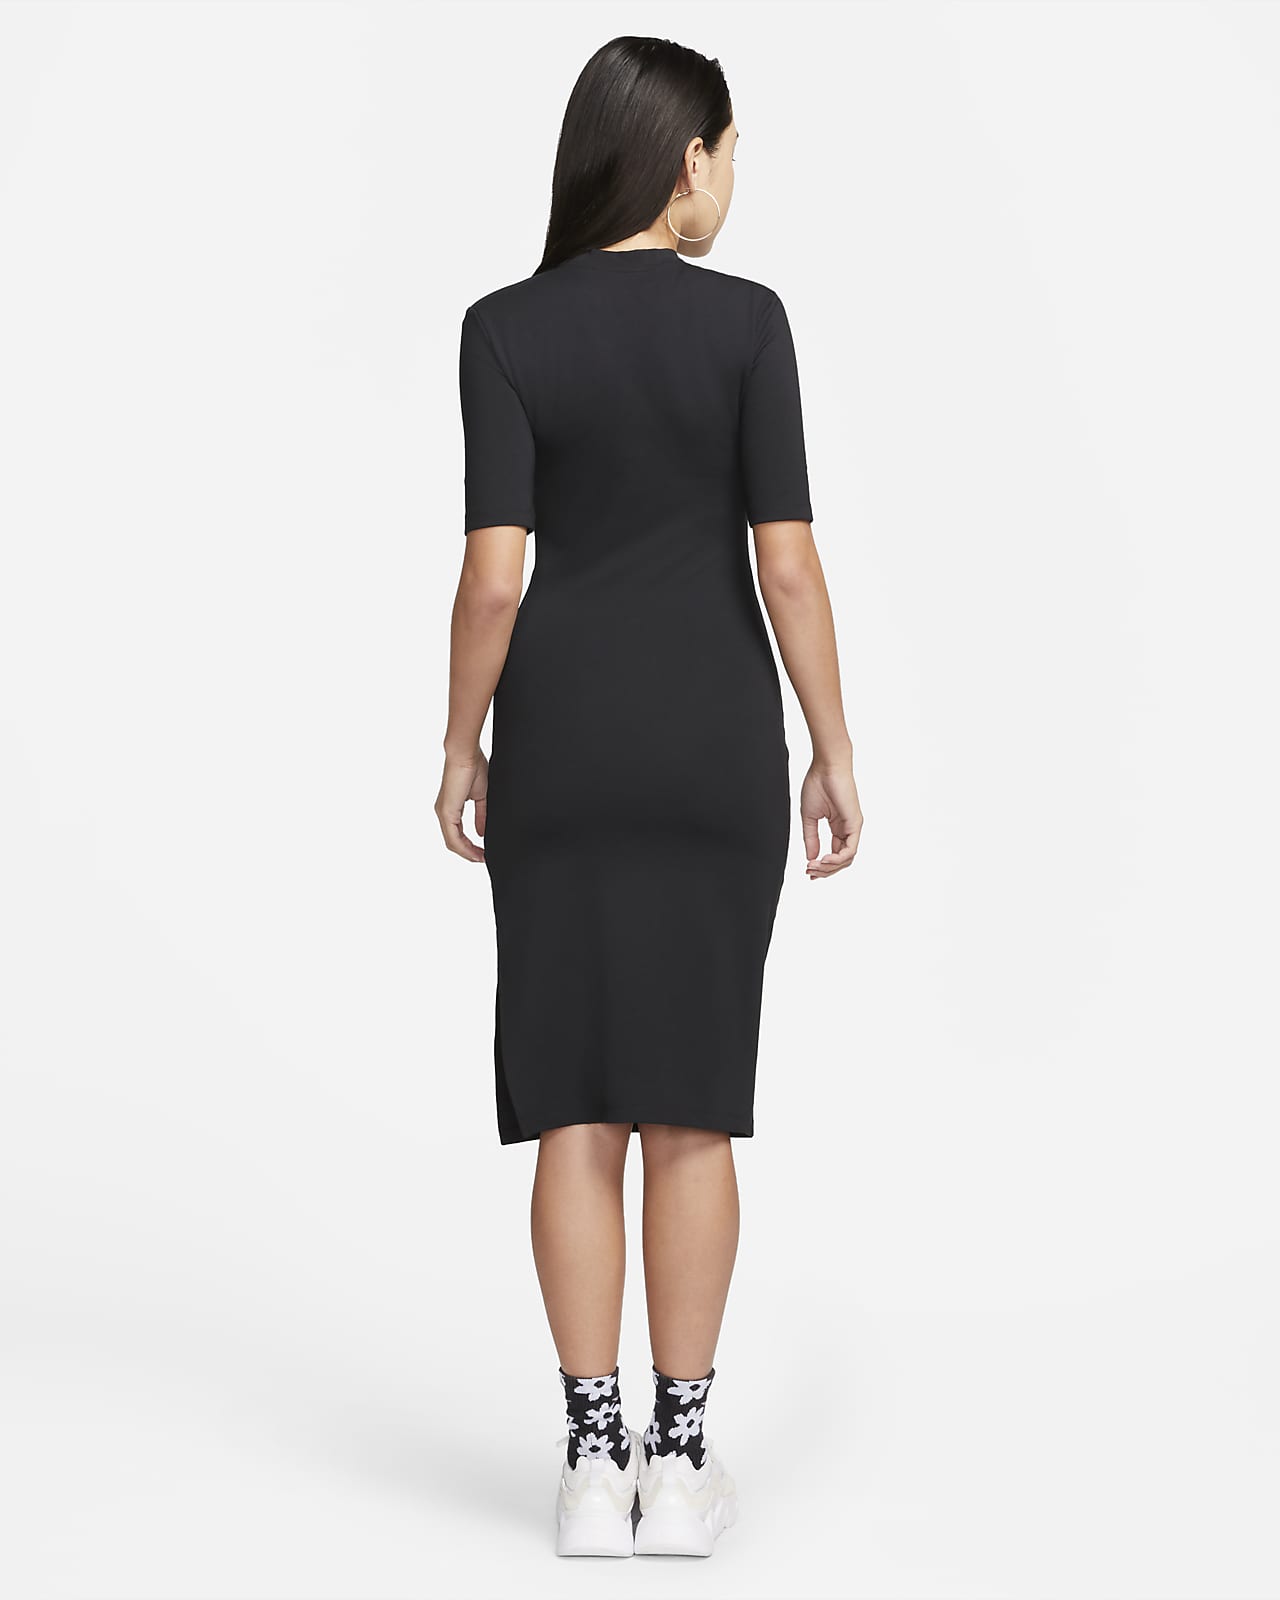 Ribbed Knit T Shirt Dress (XL-2X)